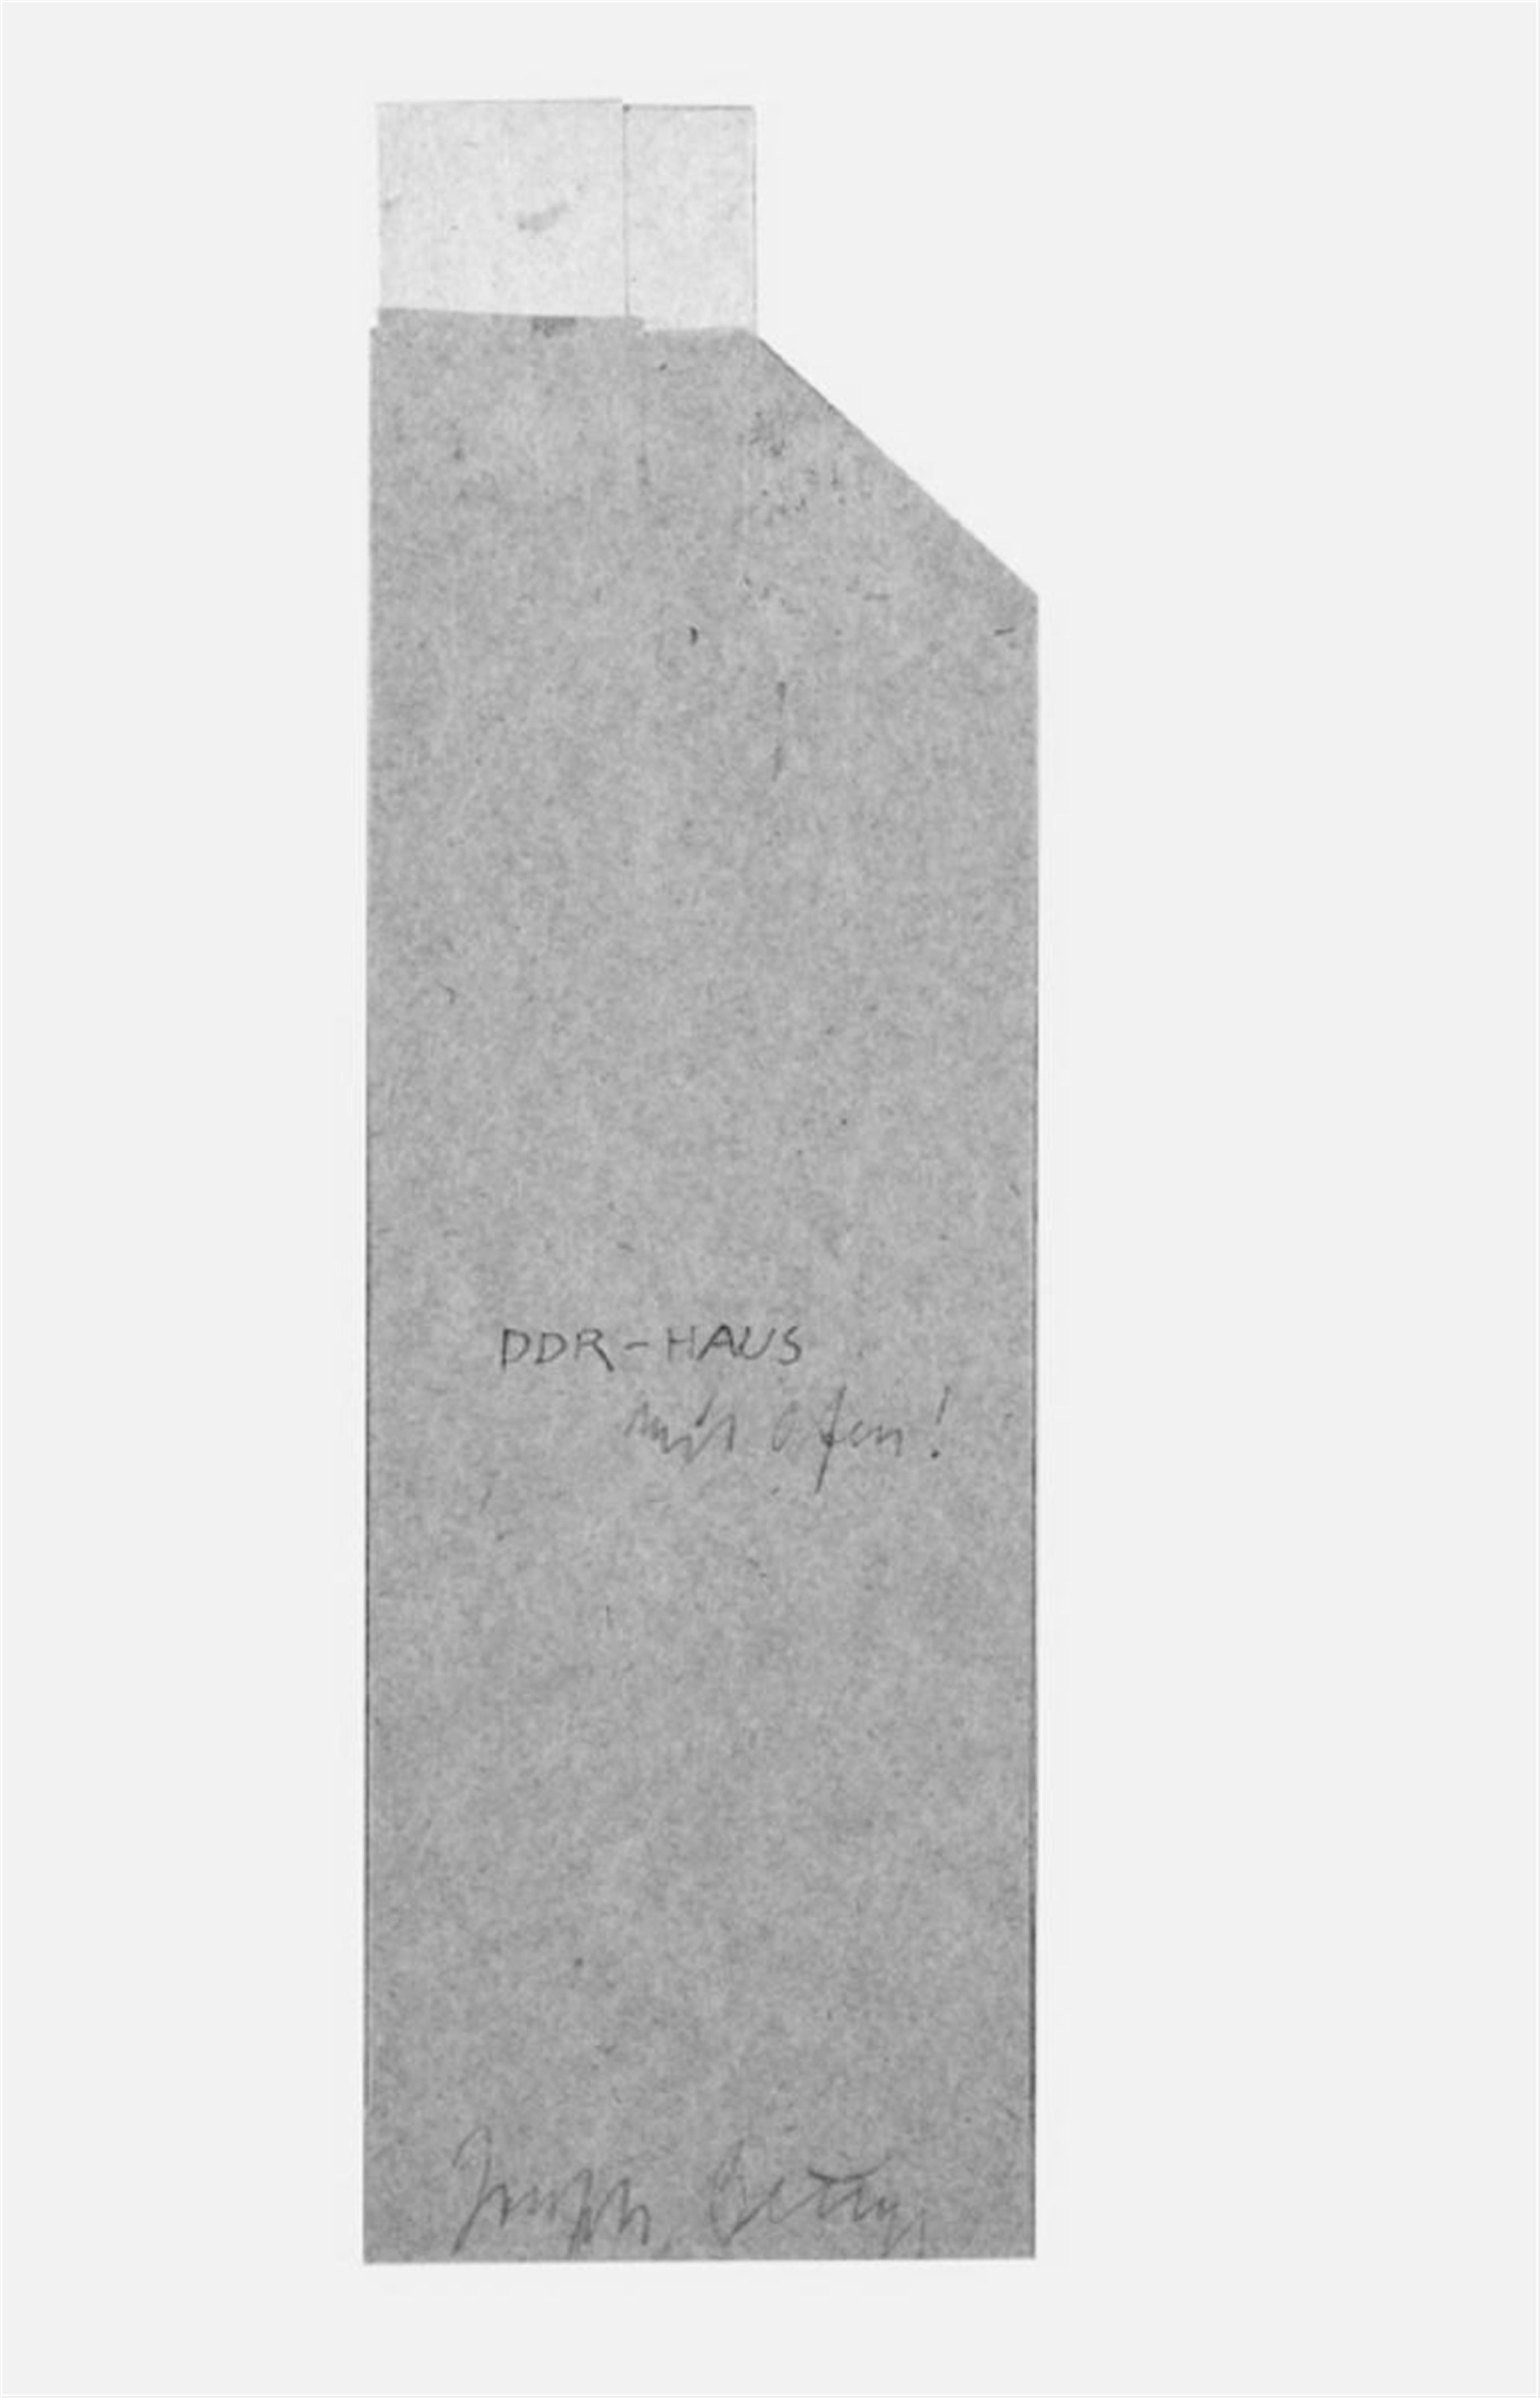 Joseph Beuys - DDR-HAUS mit Ofen - image-1